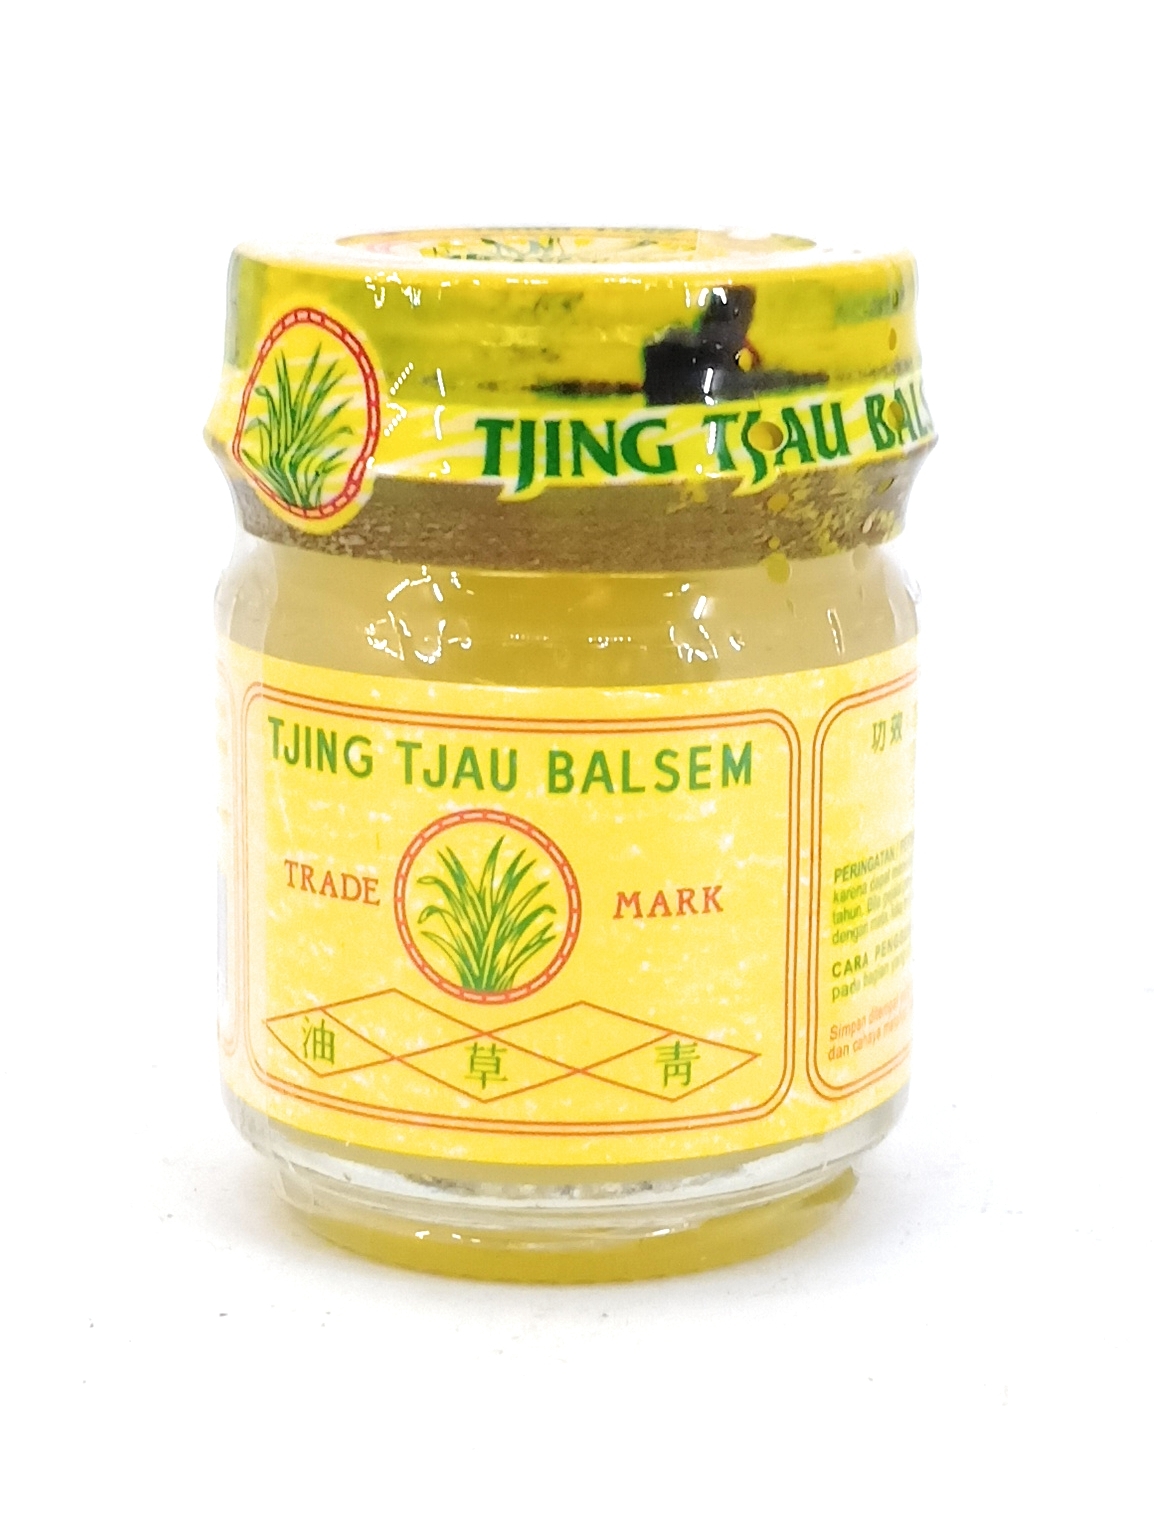 Tjing Tjau Balsem Yellow Balm, 20 Gram